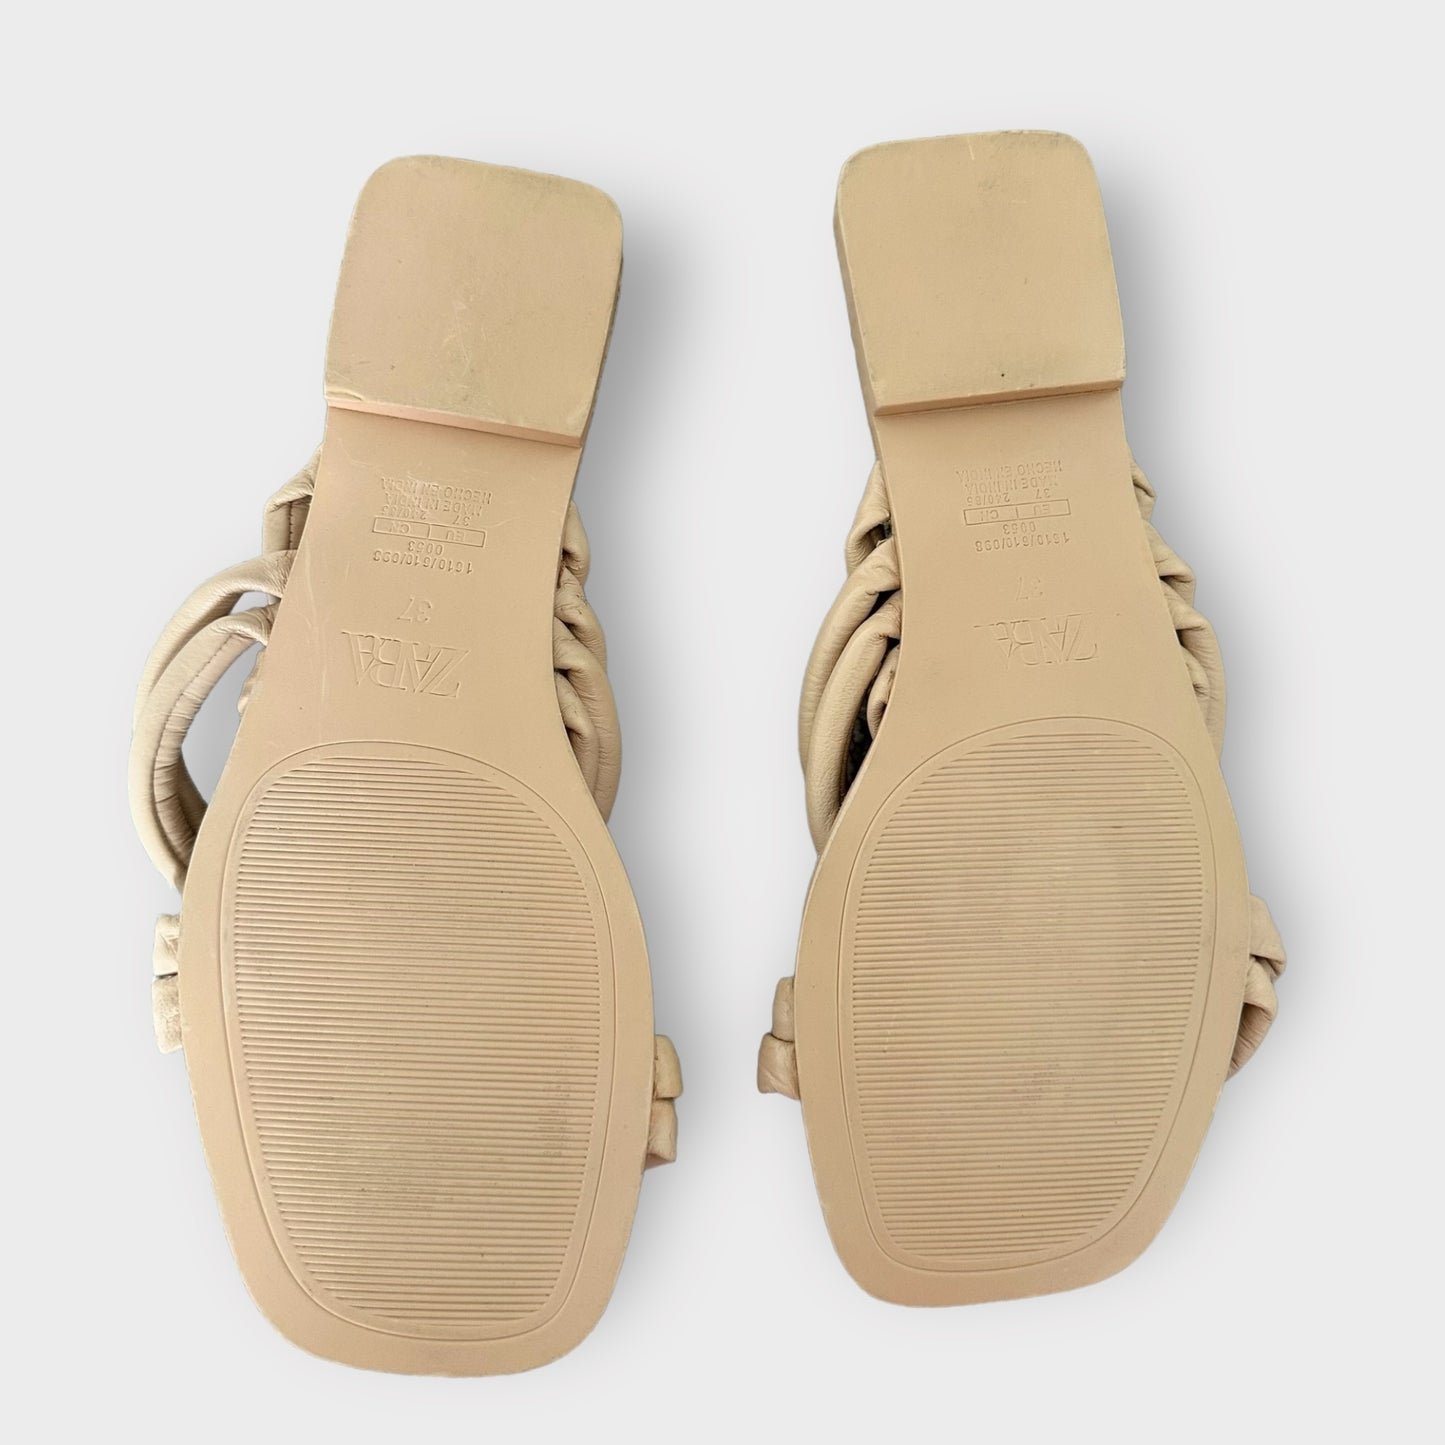 Zara beige cream knot sliders sandals shoes new UK 4 EU 37